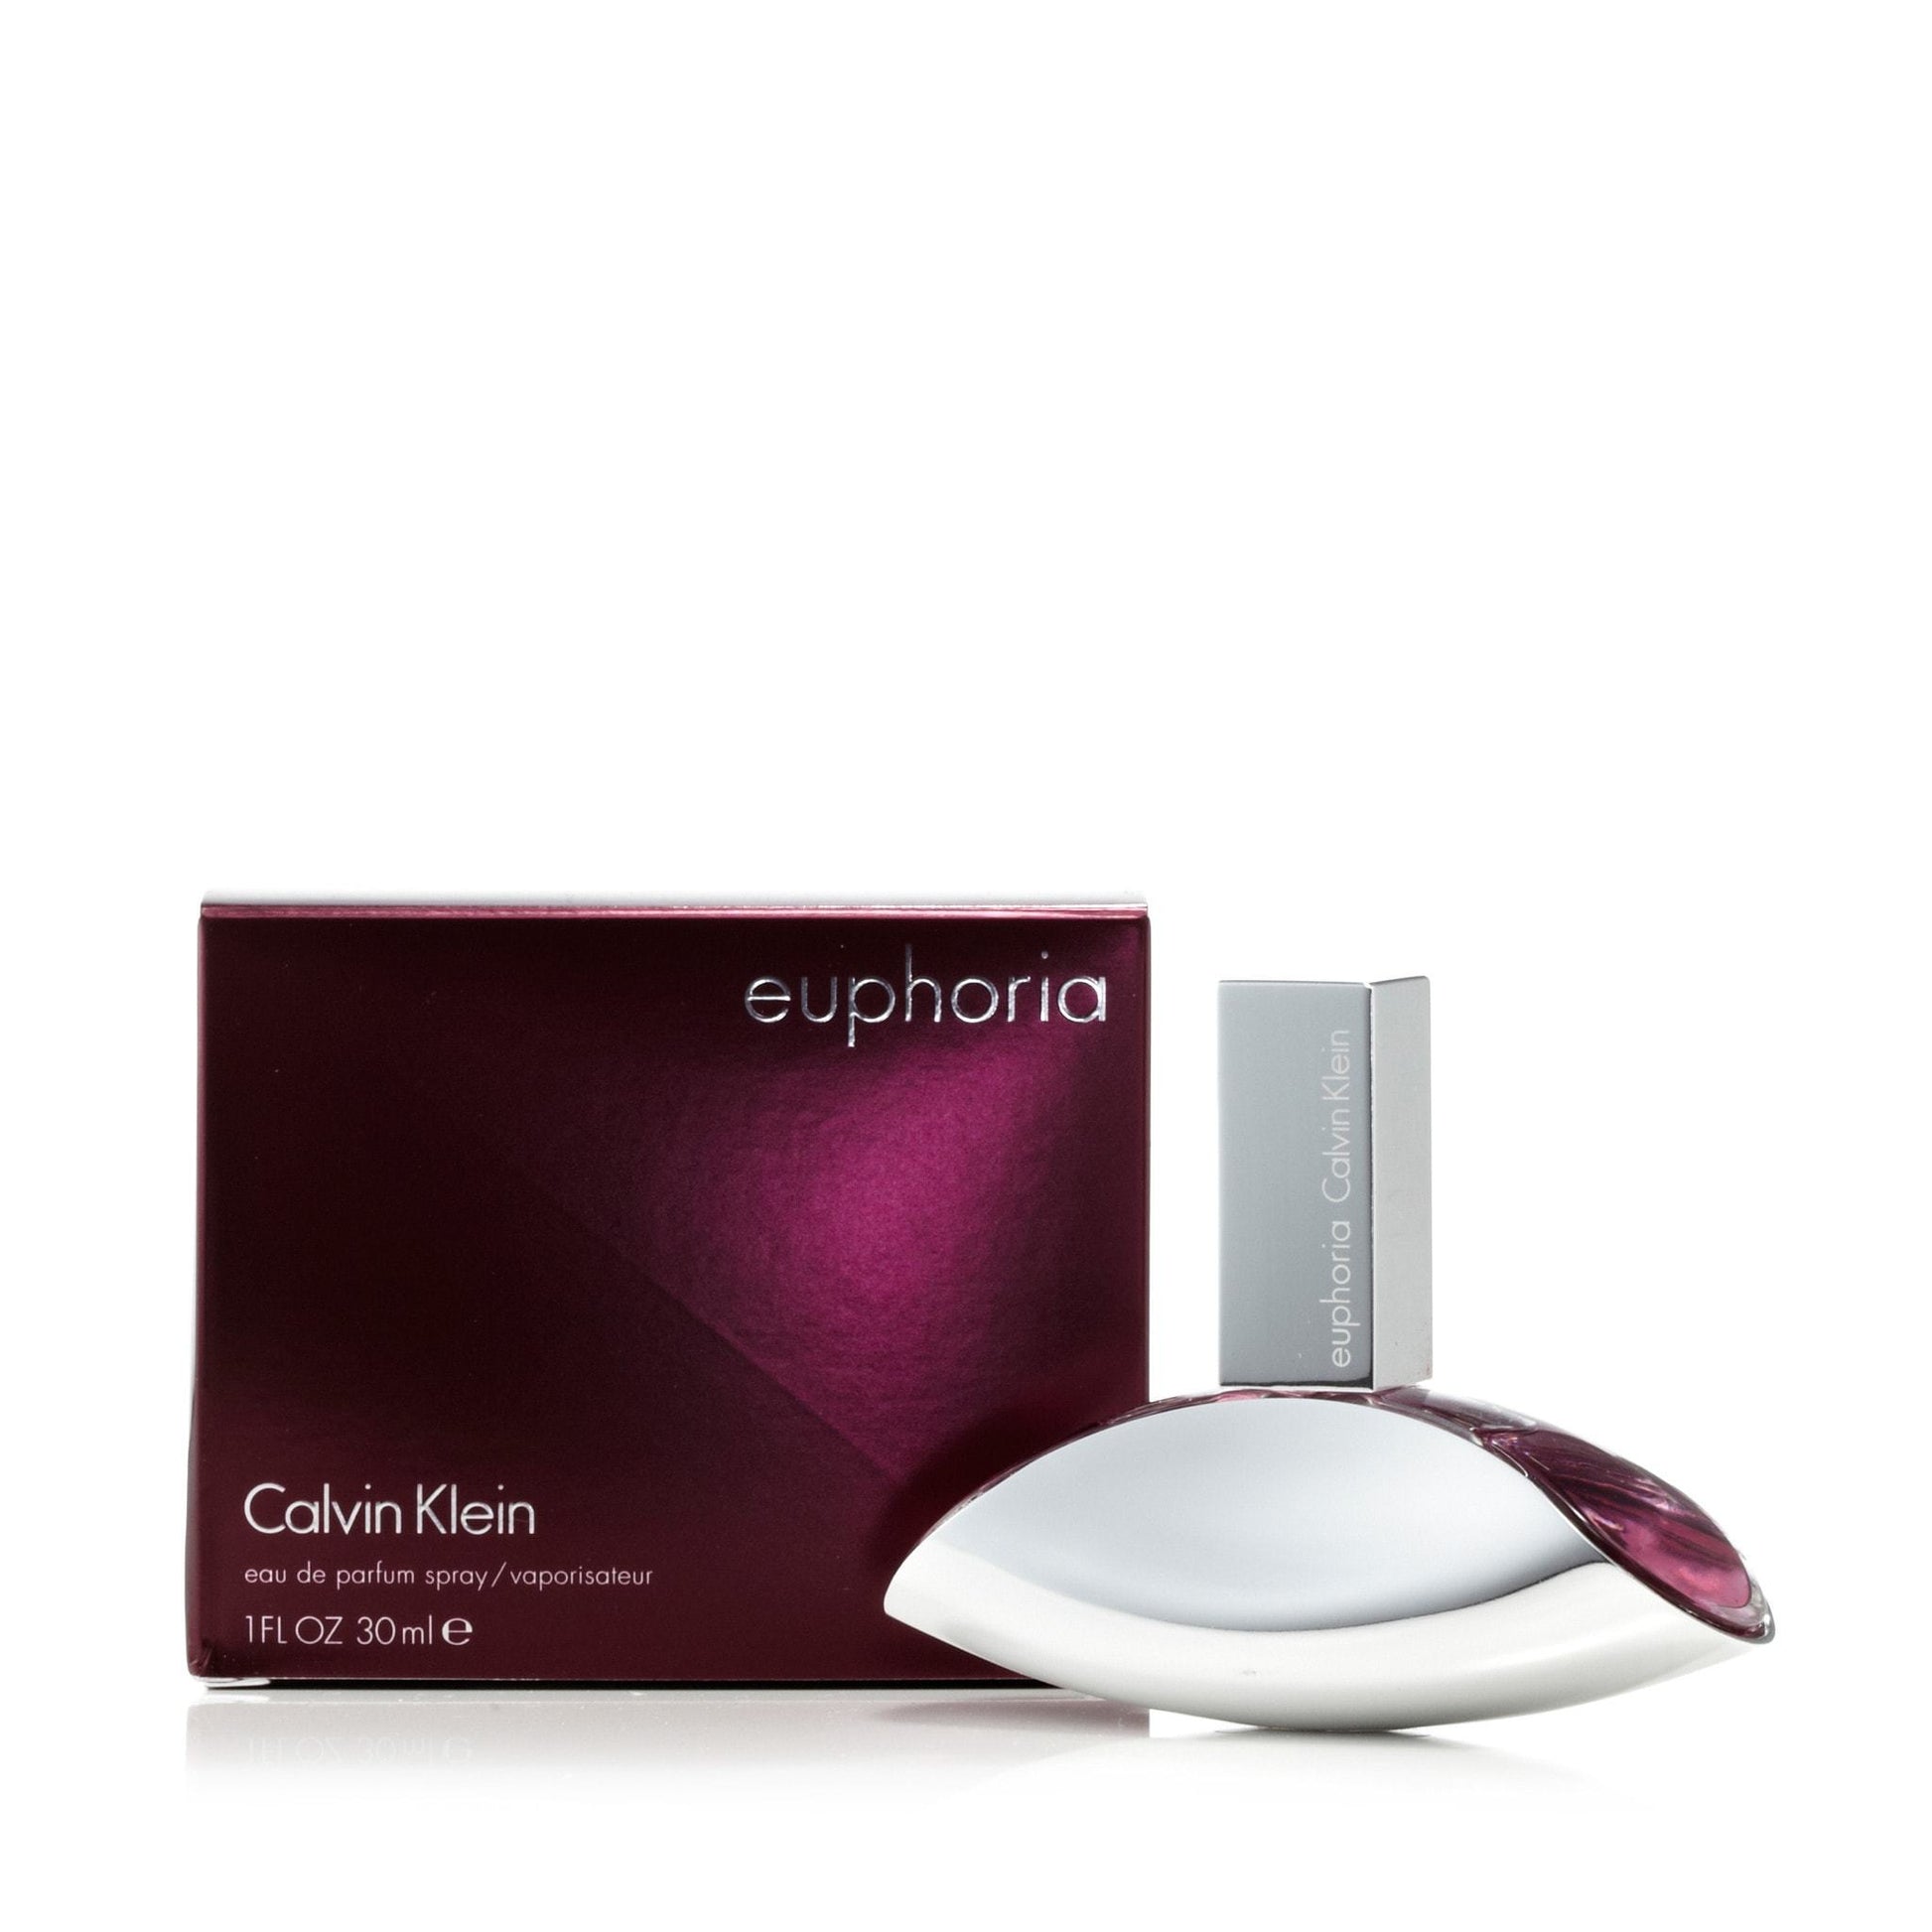 Euphoria Eau de Parfum Spray for Women by Calvin Klein, Product image 1